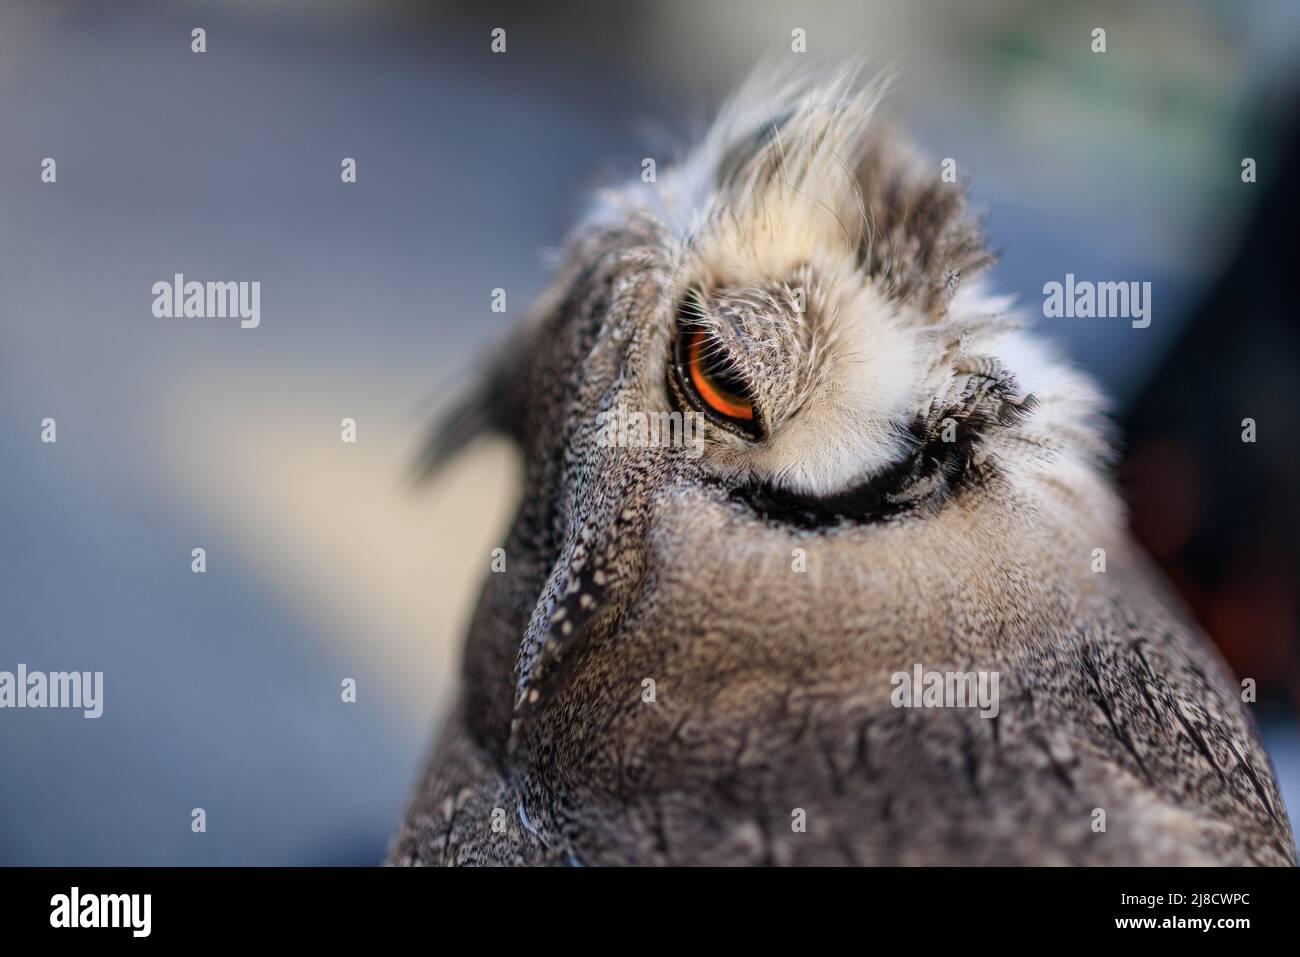 Closeup of sleepy owl with eyes half-closed and head up Stock Photo